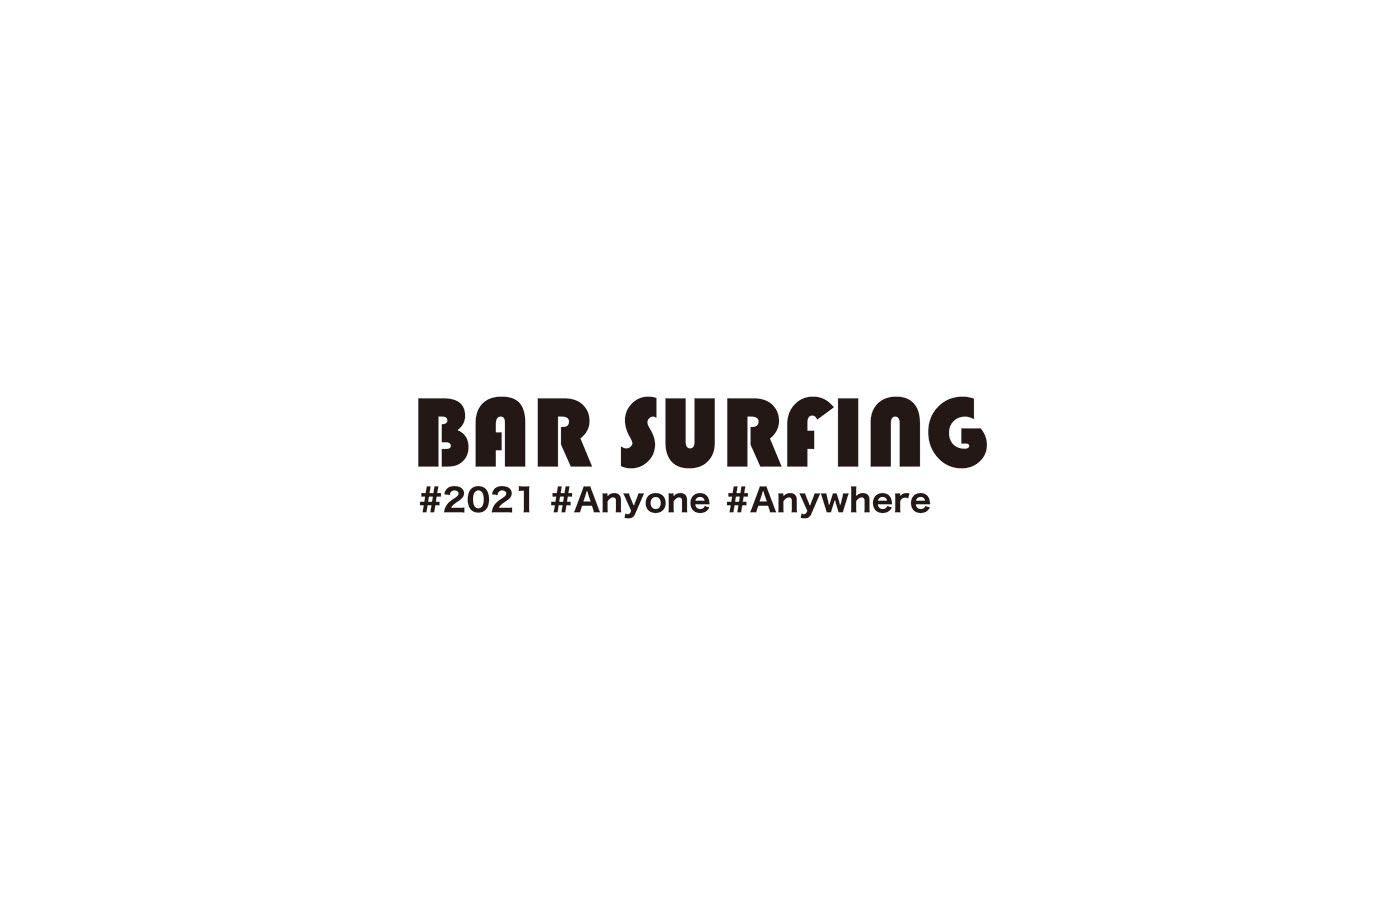 Bar surfing key visual VI 主視覺 跑吧 酒精衝浪